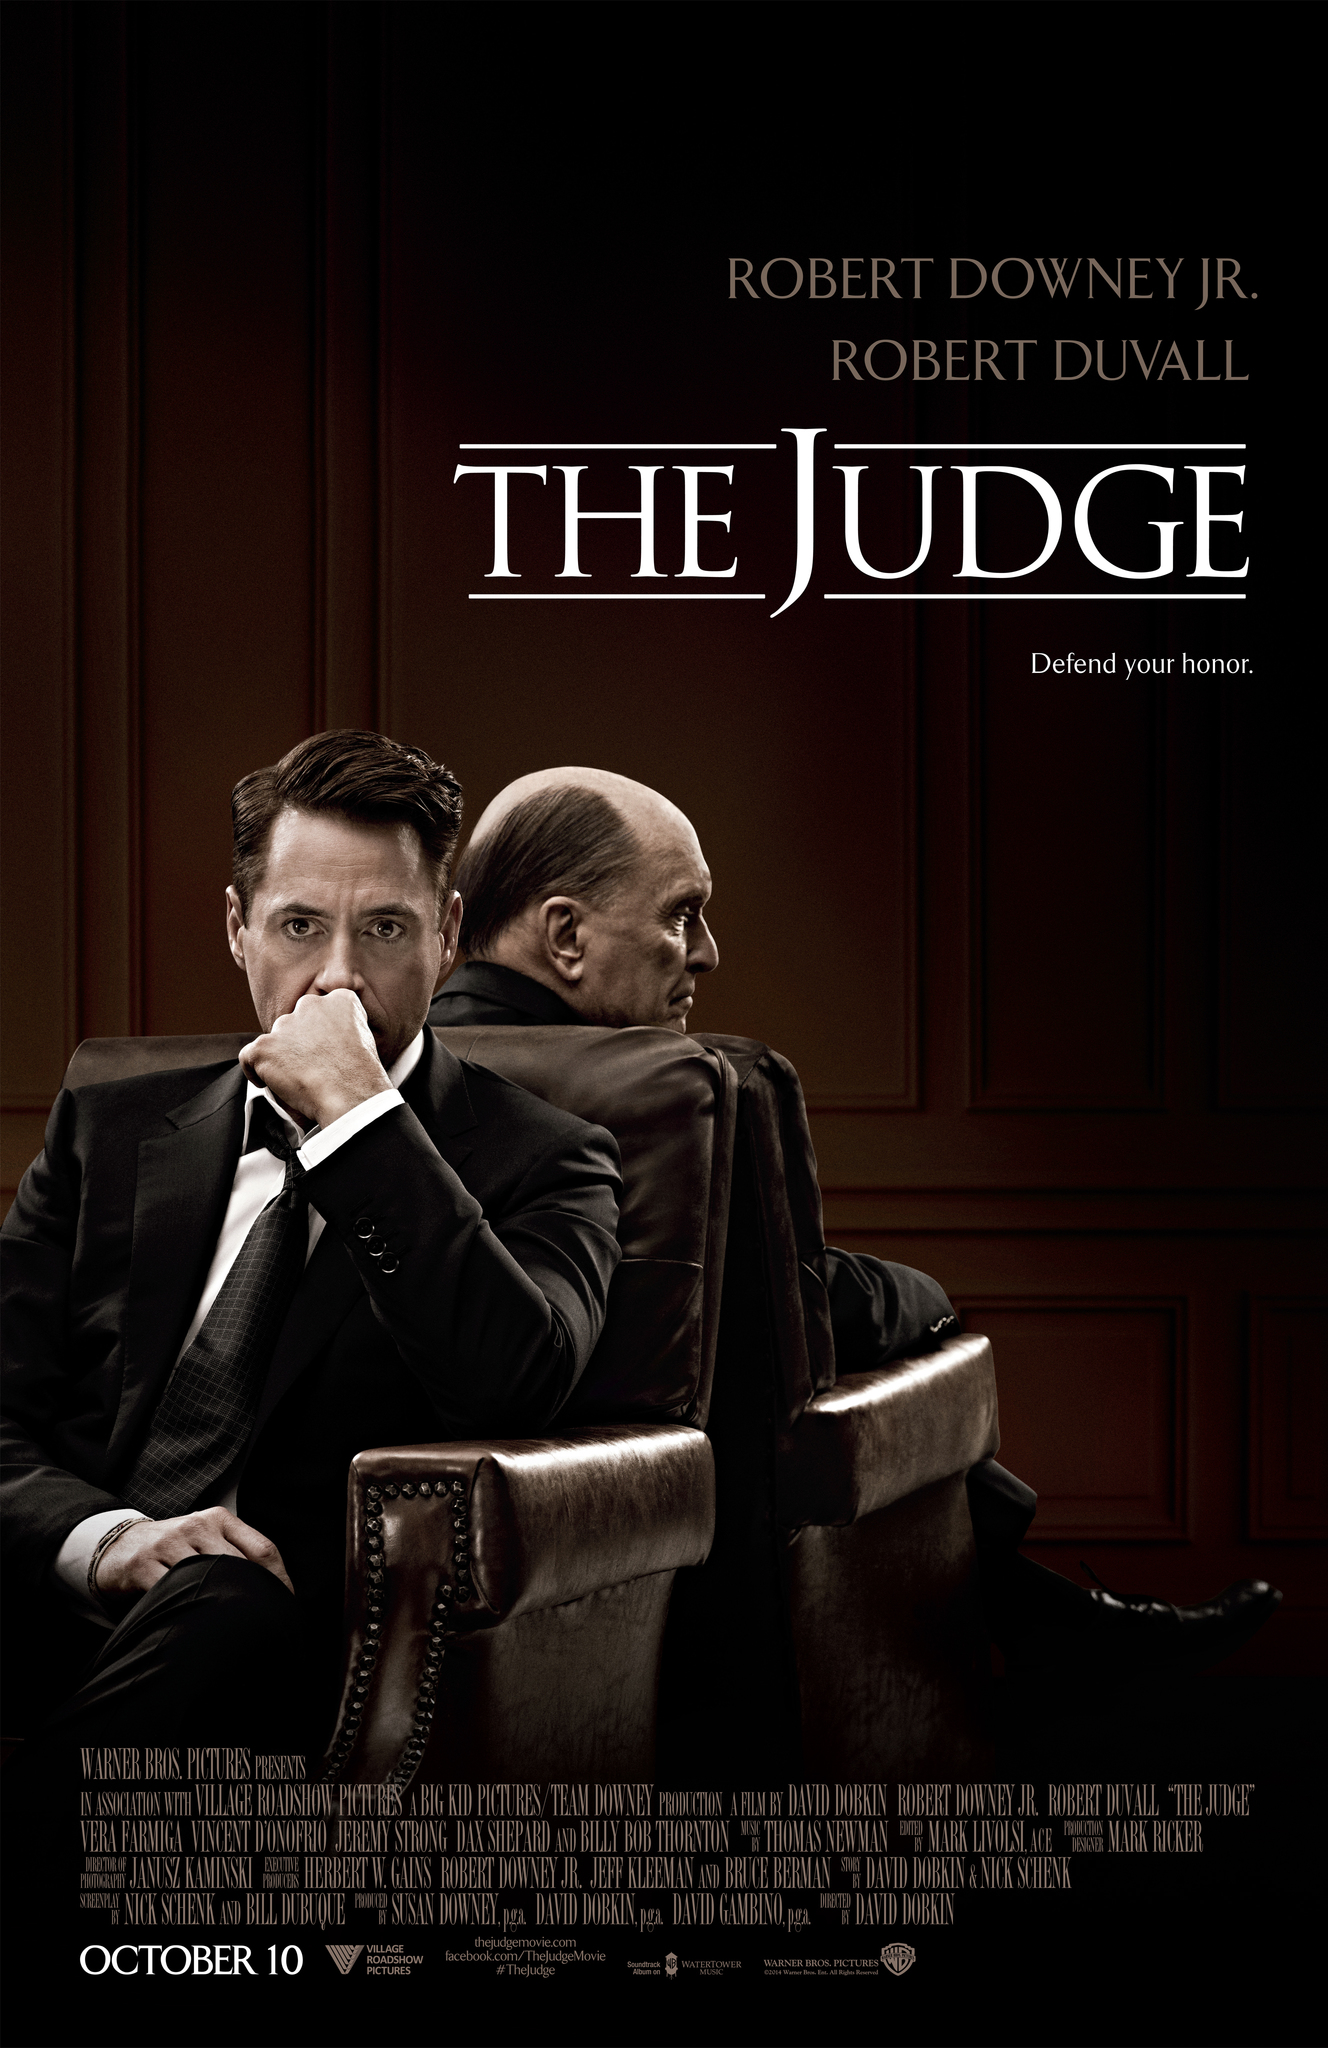 The Judge (2014) ★★★★☆